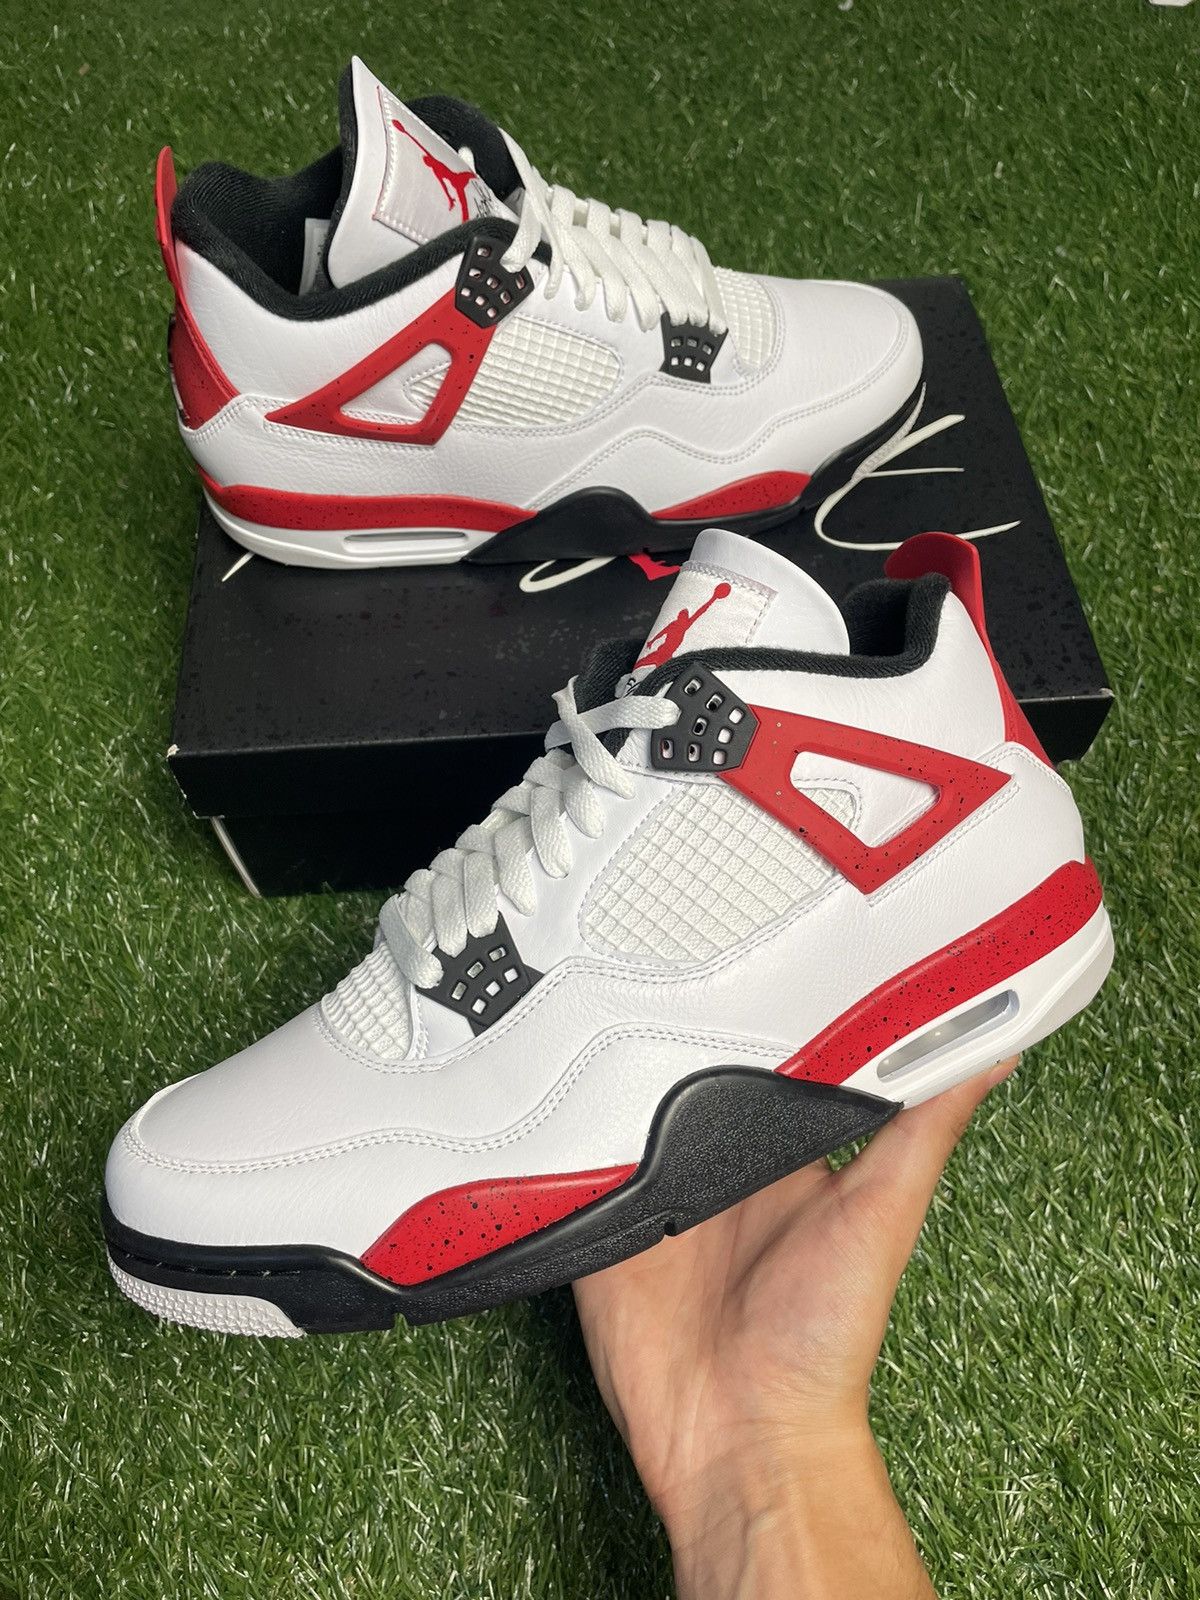 Pre-owned Jordan Nike New Air Jordan 4 Retro Red Cement Size 11 Shoes